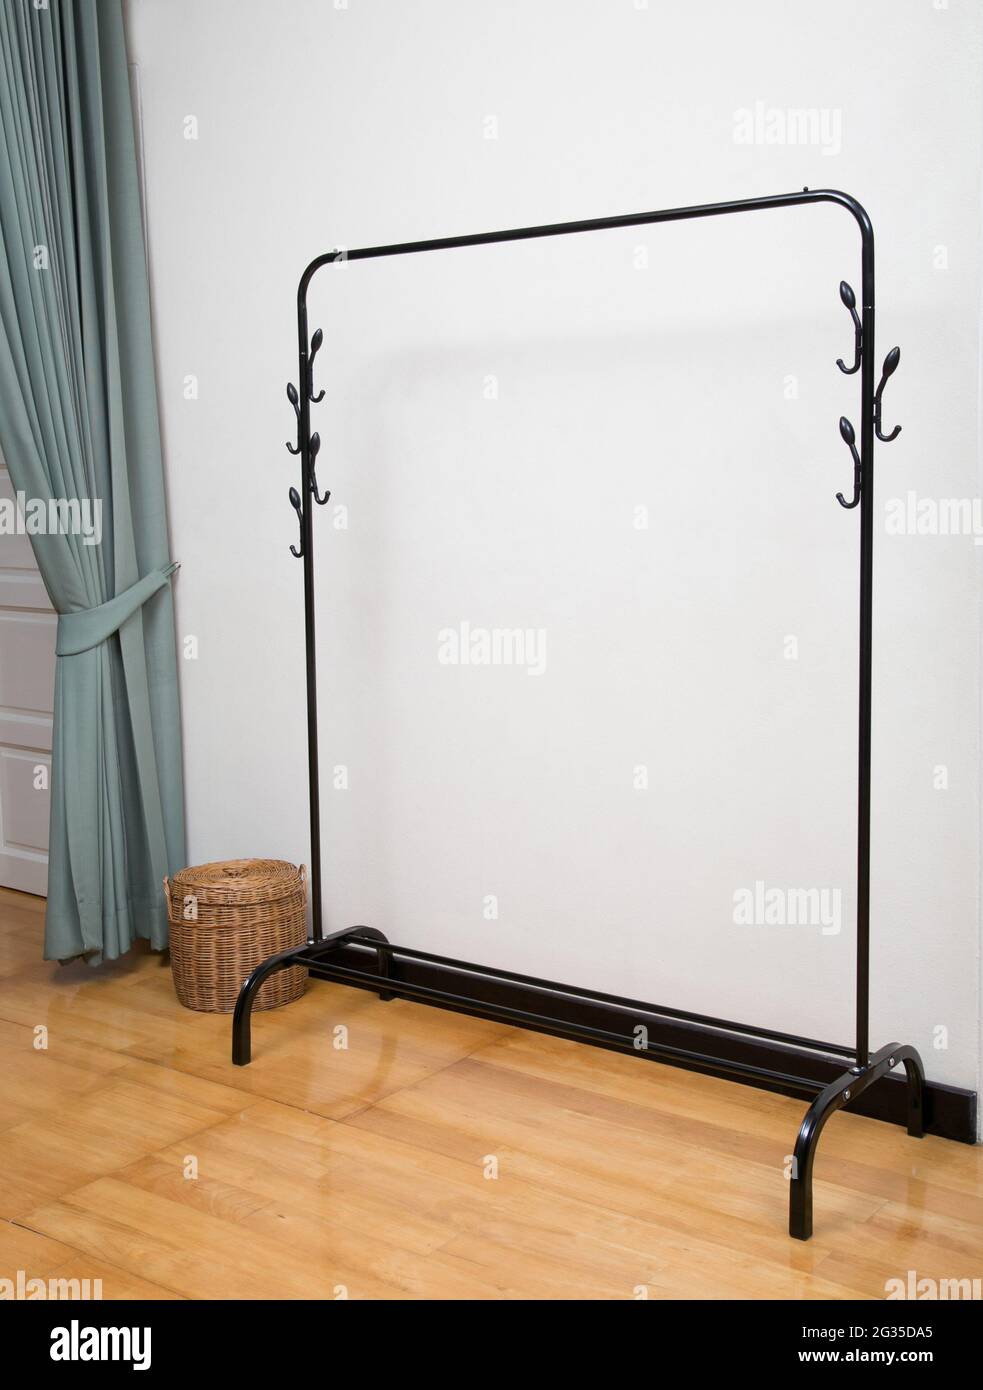 Empty black cloths rack in white room interior background Stock Photo